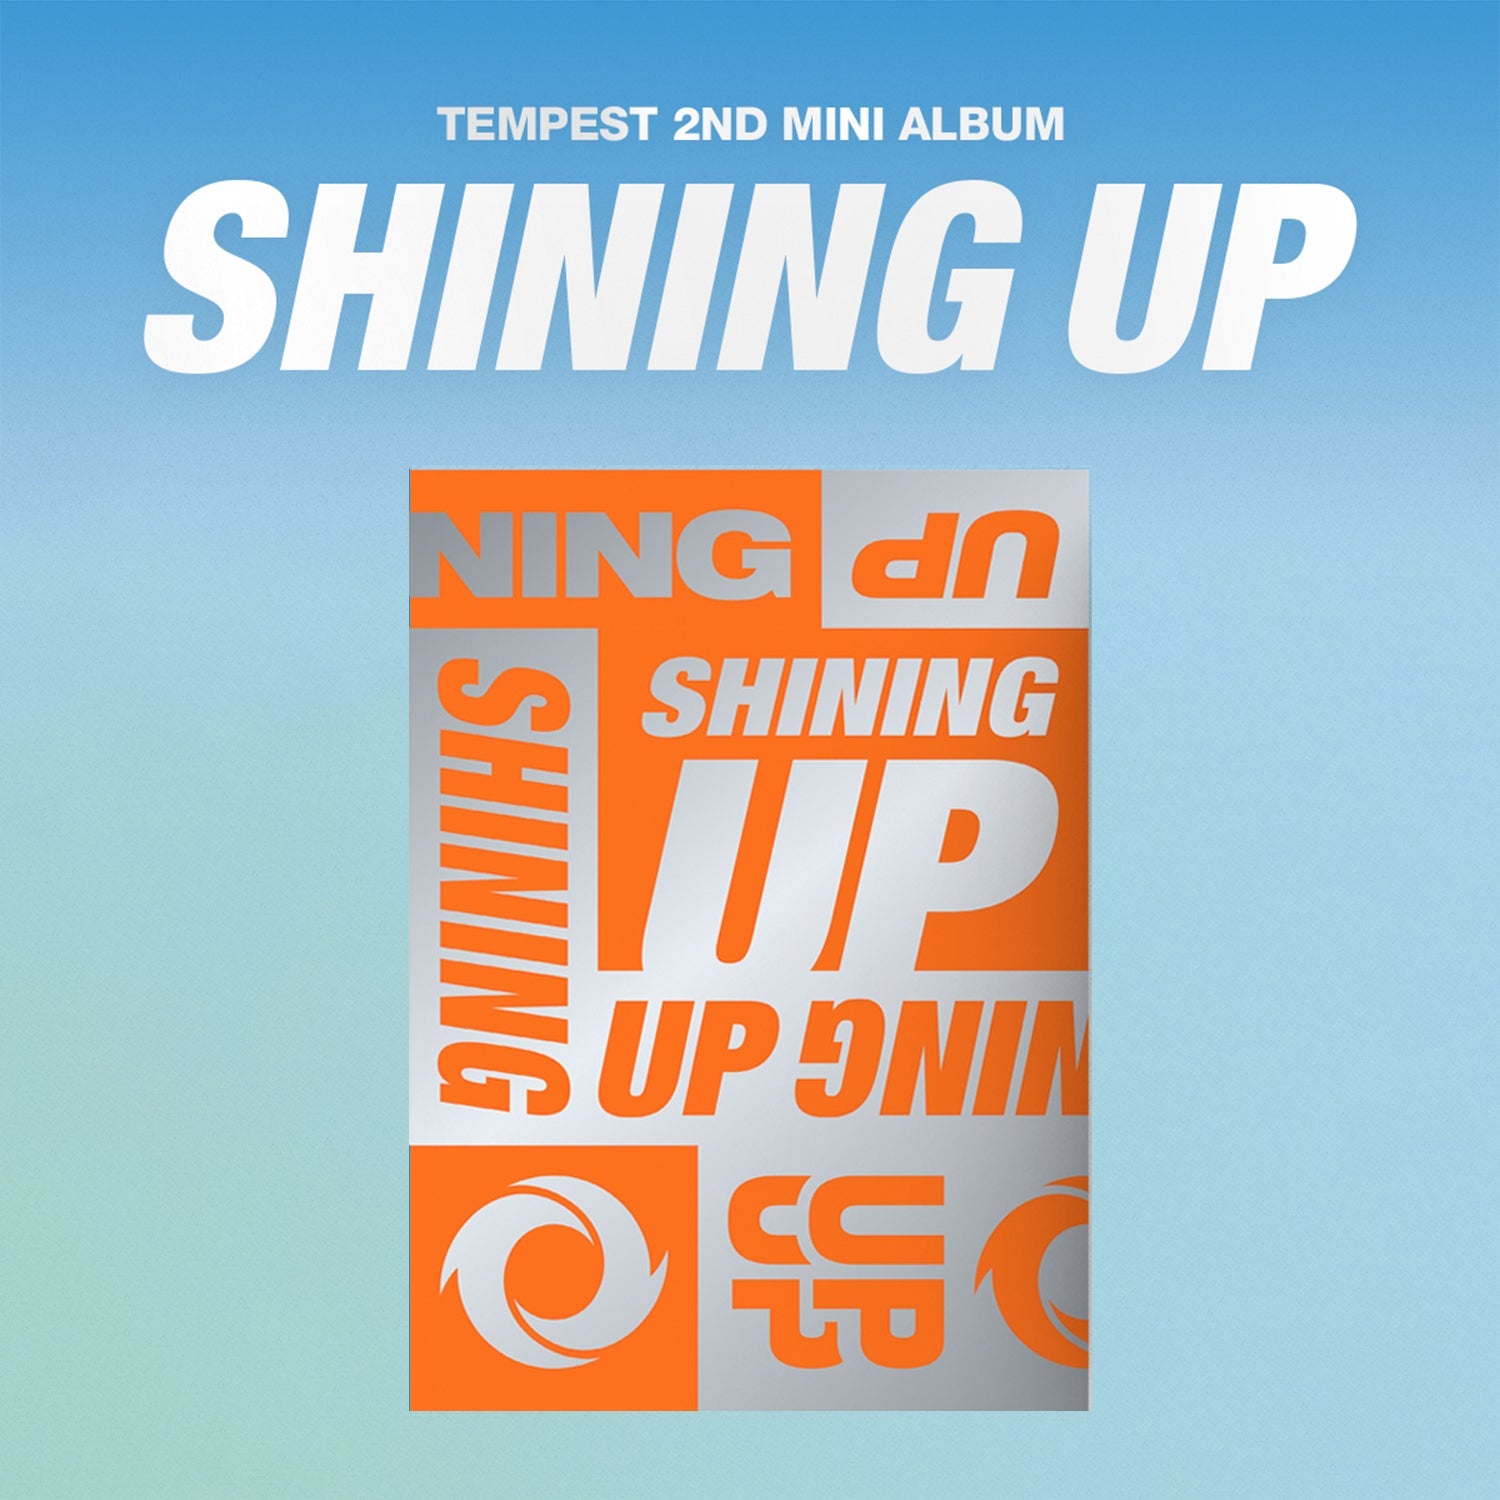 TEMPEST 2ND MINI ALBUM 'SHINING UP' SUNLIGHT VERSION COVER